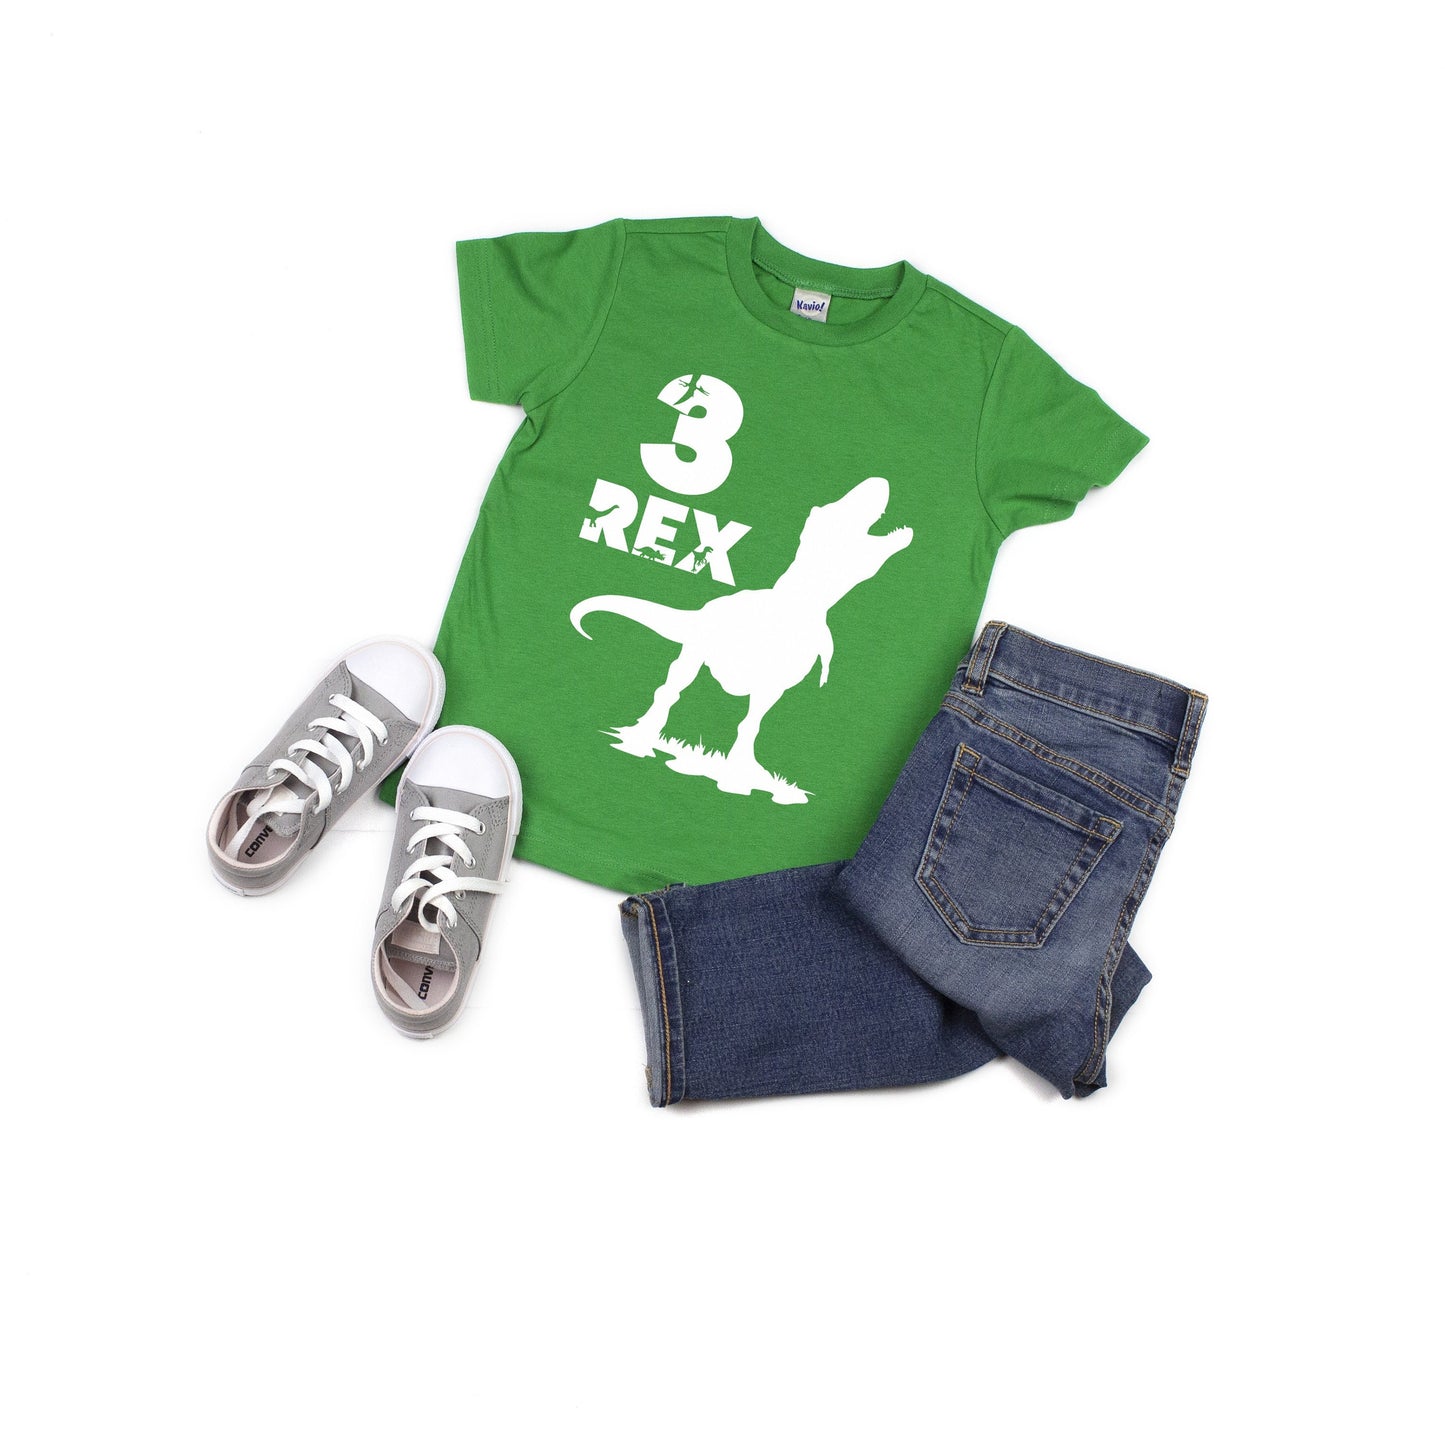 Personalized 3Rex Third Birthday Toddler Shirt - Three Year Old Shirt - 3rd Birthday Shirt - Toddler Shirt - Dinosaur Shirt - Dinosaur Party